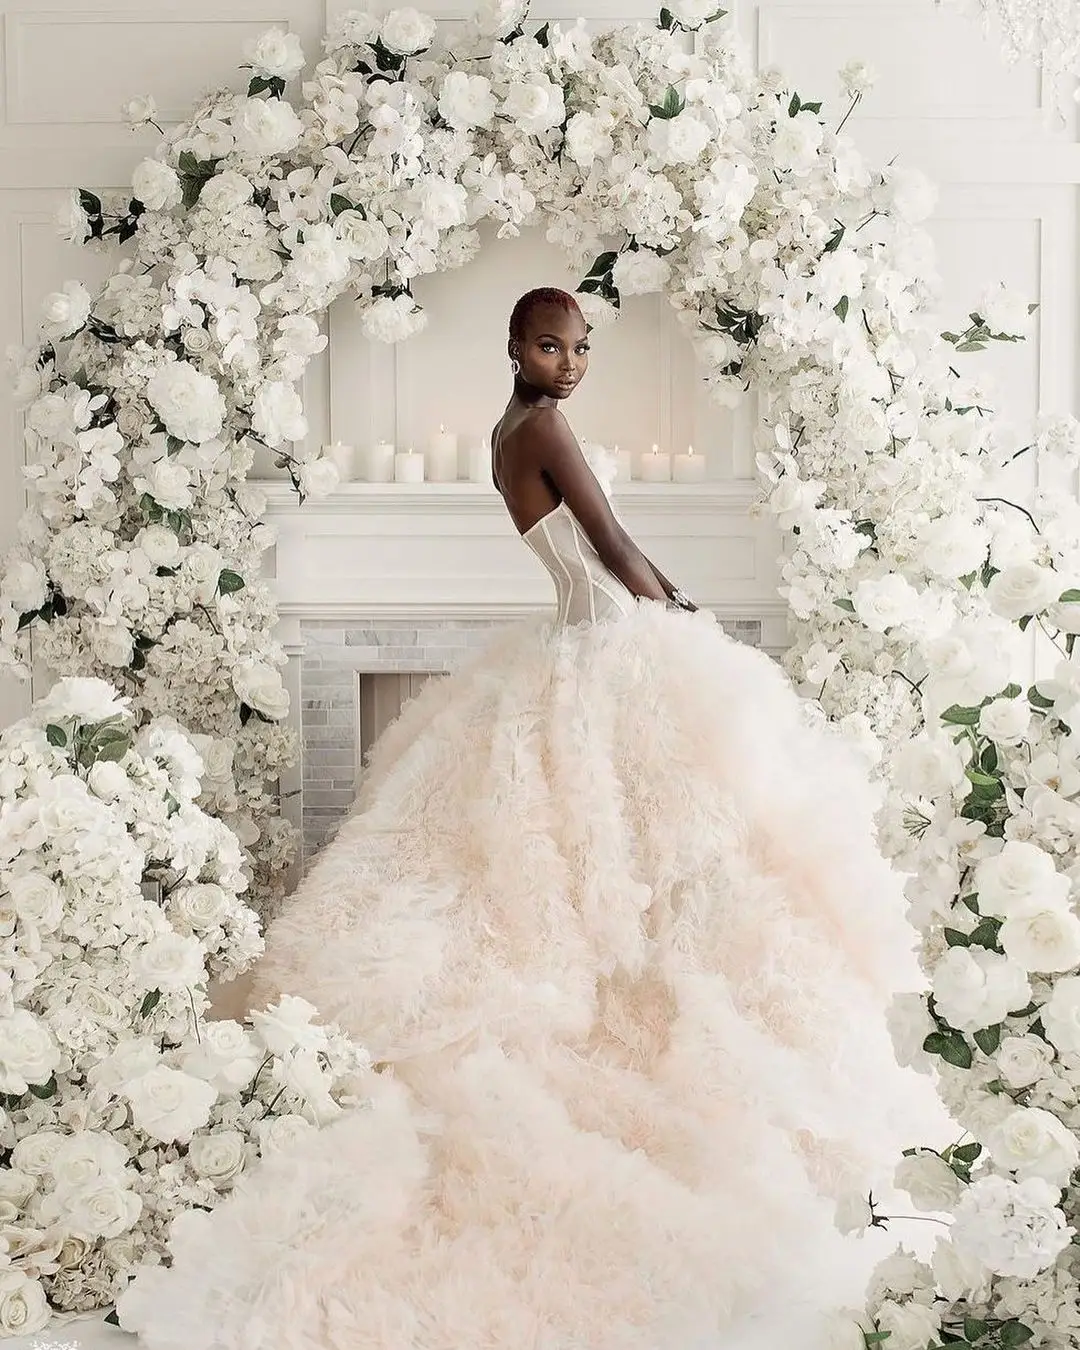 11 Most Gorgeous Backs of Wedding Dresses ...